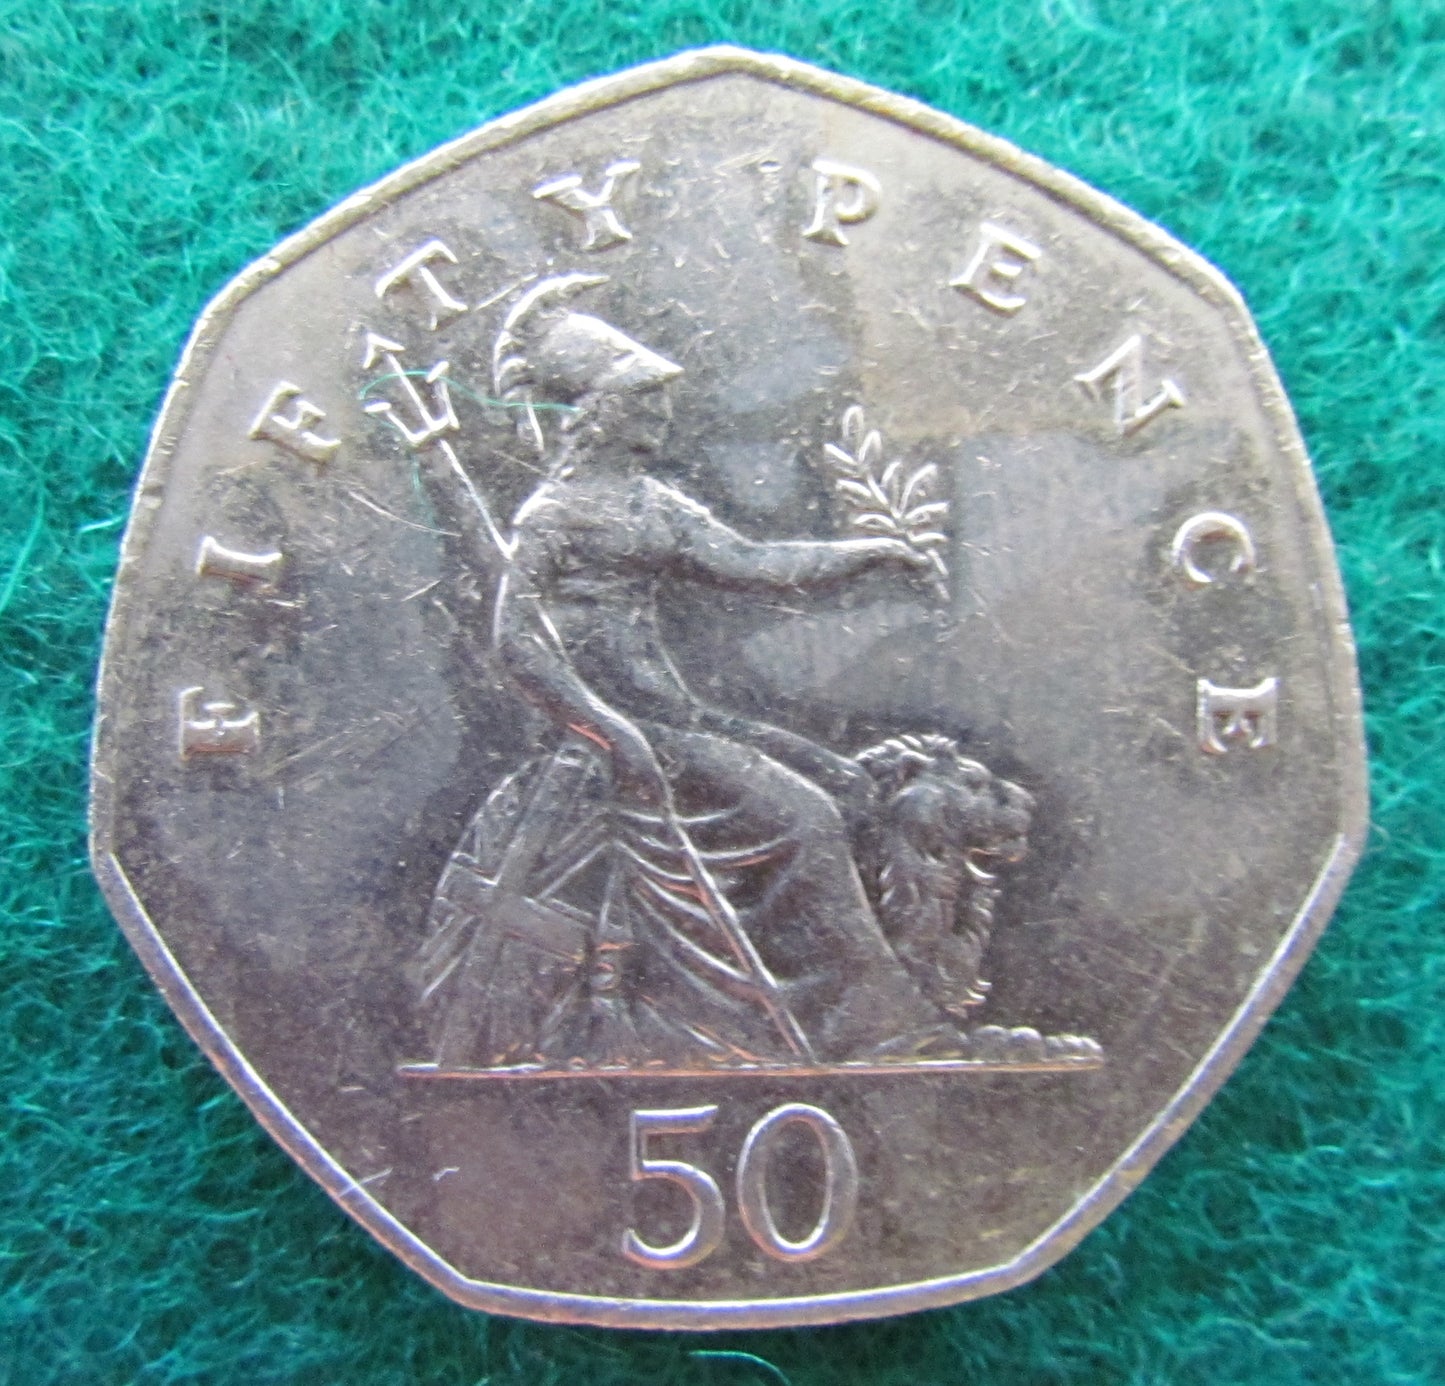 GB British UK English 1982 50 New Pence Queen Elizabeth II Coin